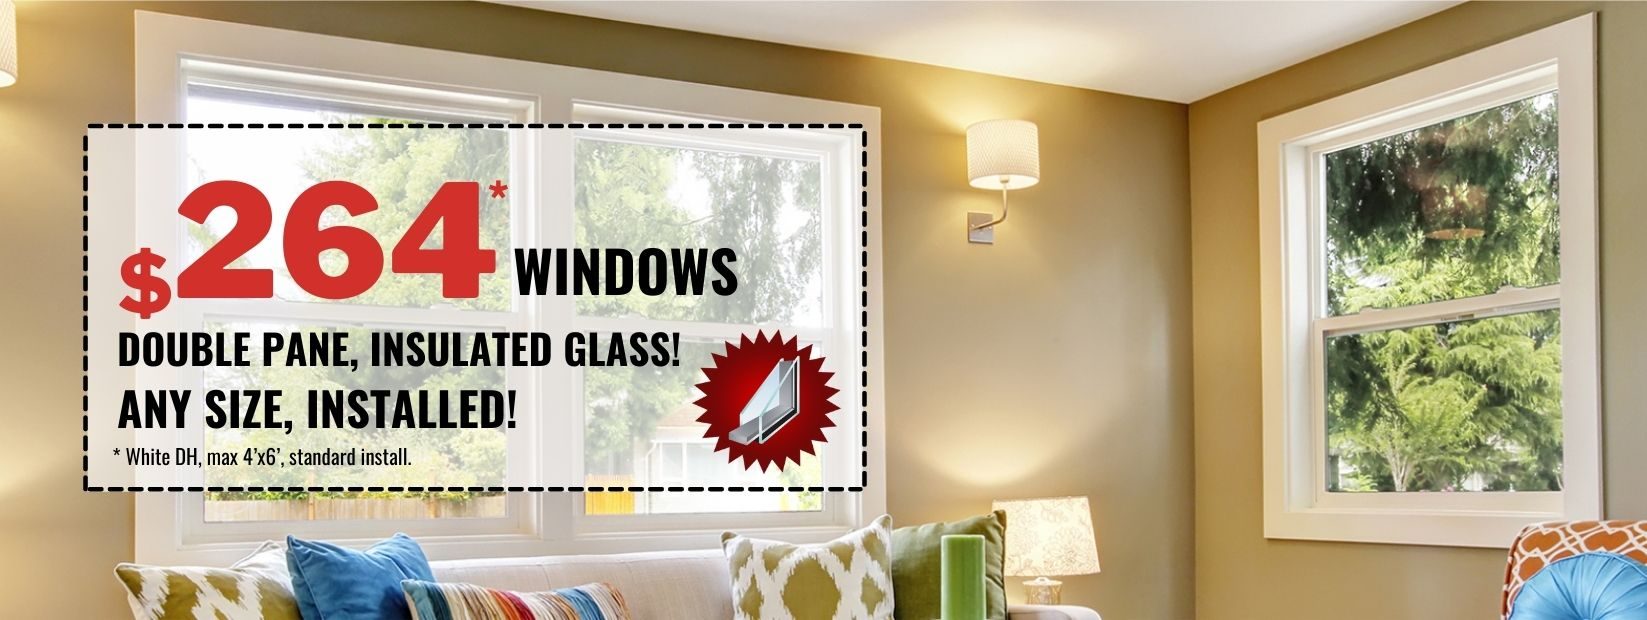 Double Pane Insulated Glass Windows